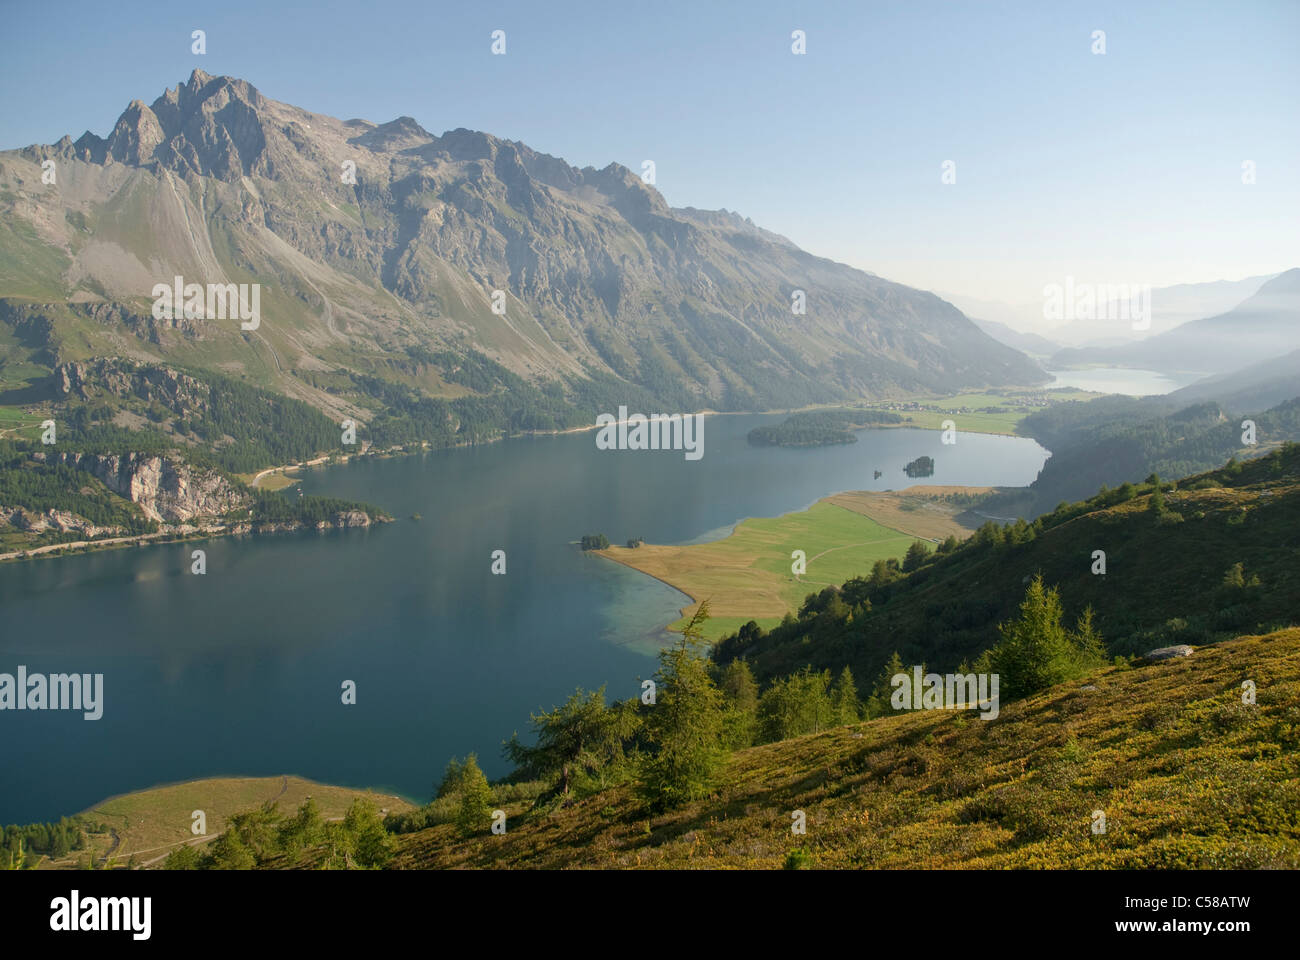 3000, tree border, mountains, mountain lake, Grison Alps, Engadin, Europe, summit, peak, Graubunden, Grisons, canton GR, larch, Stock Photo